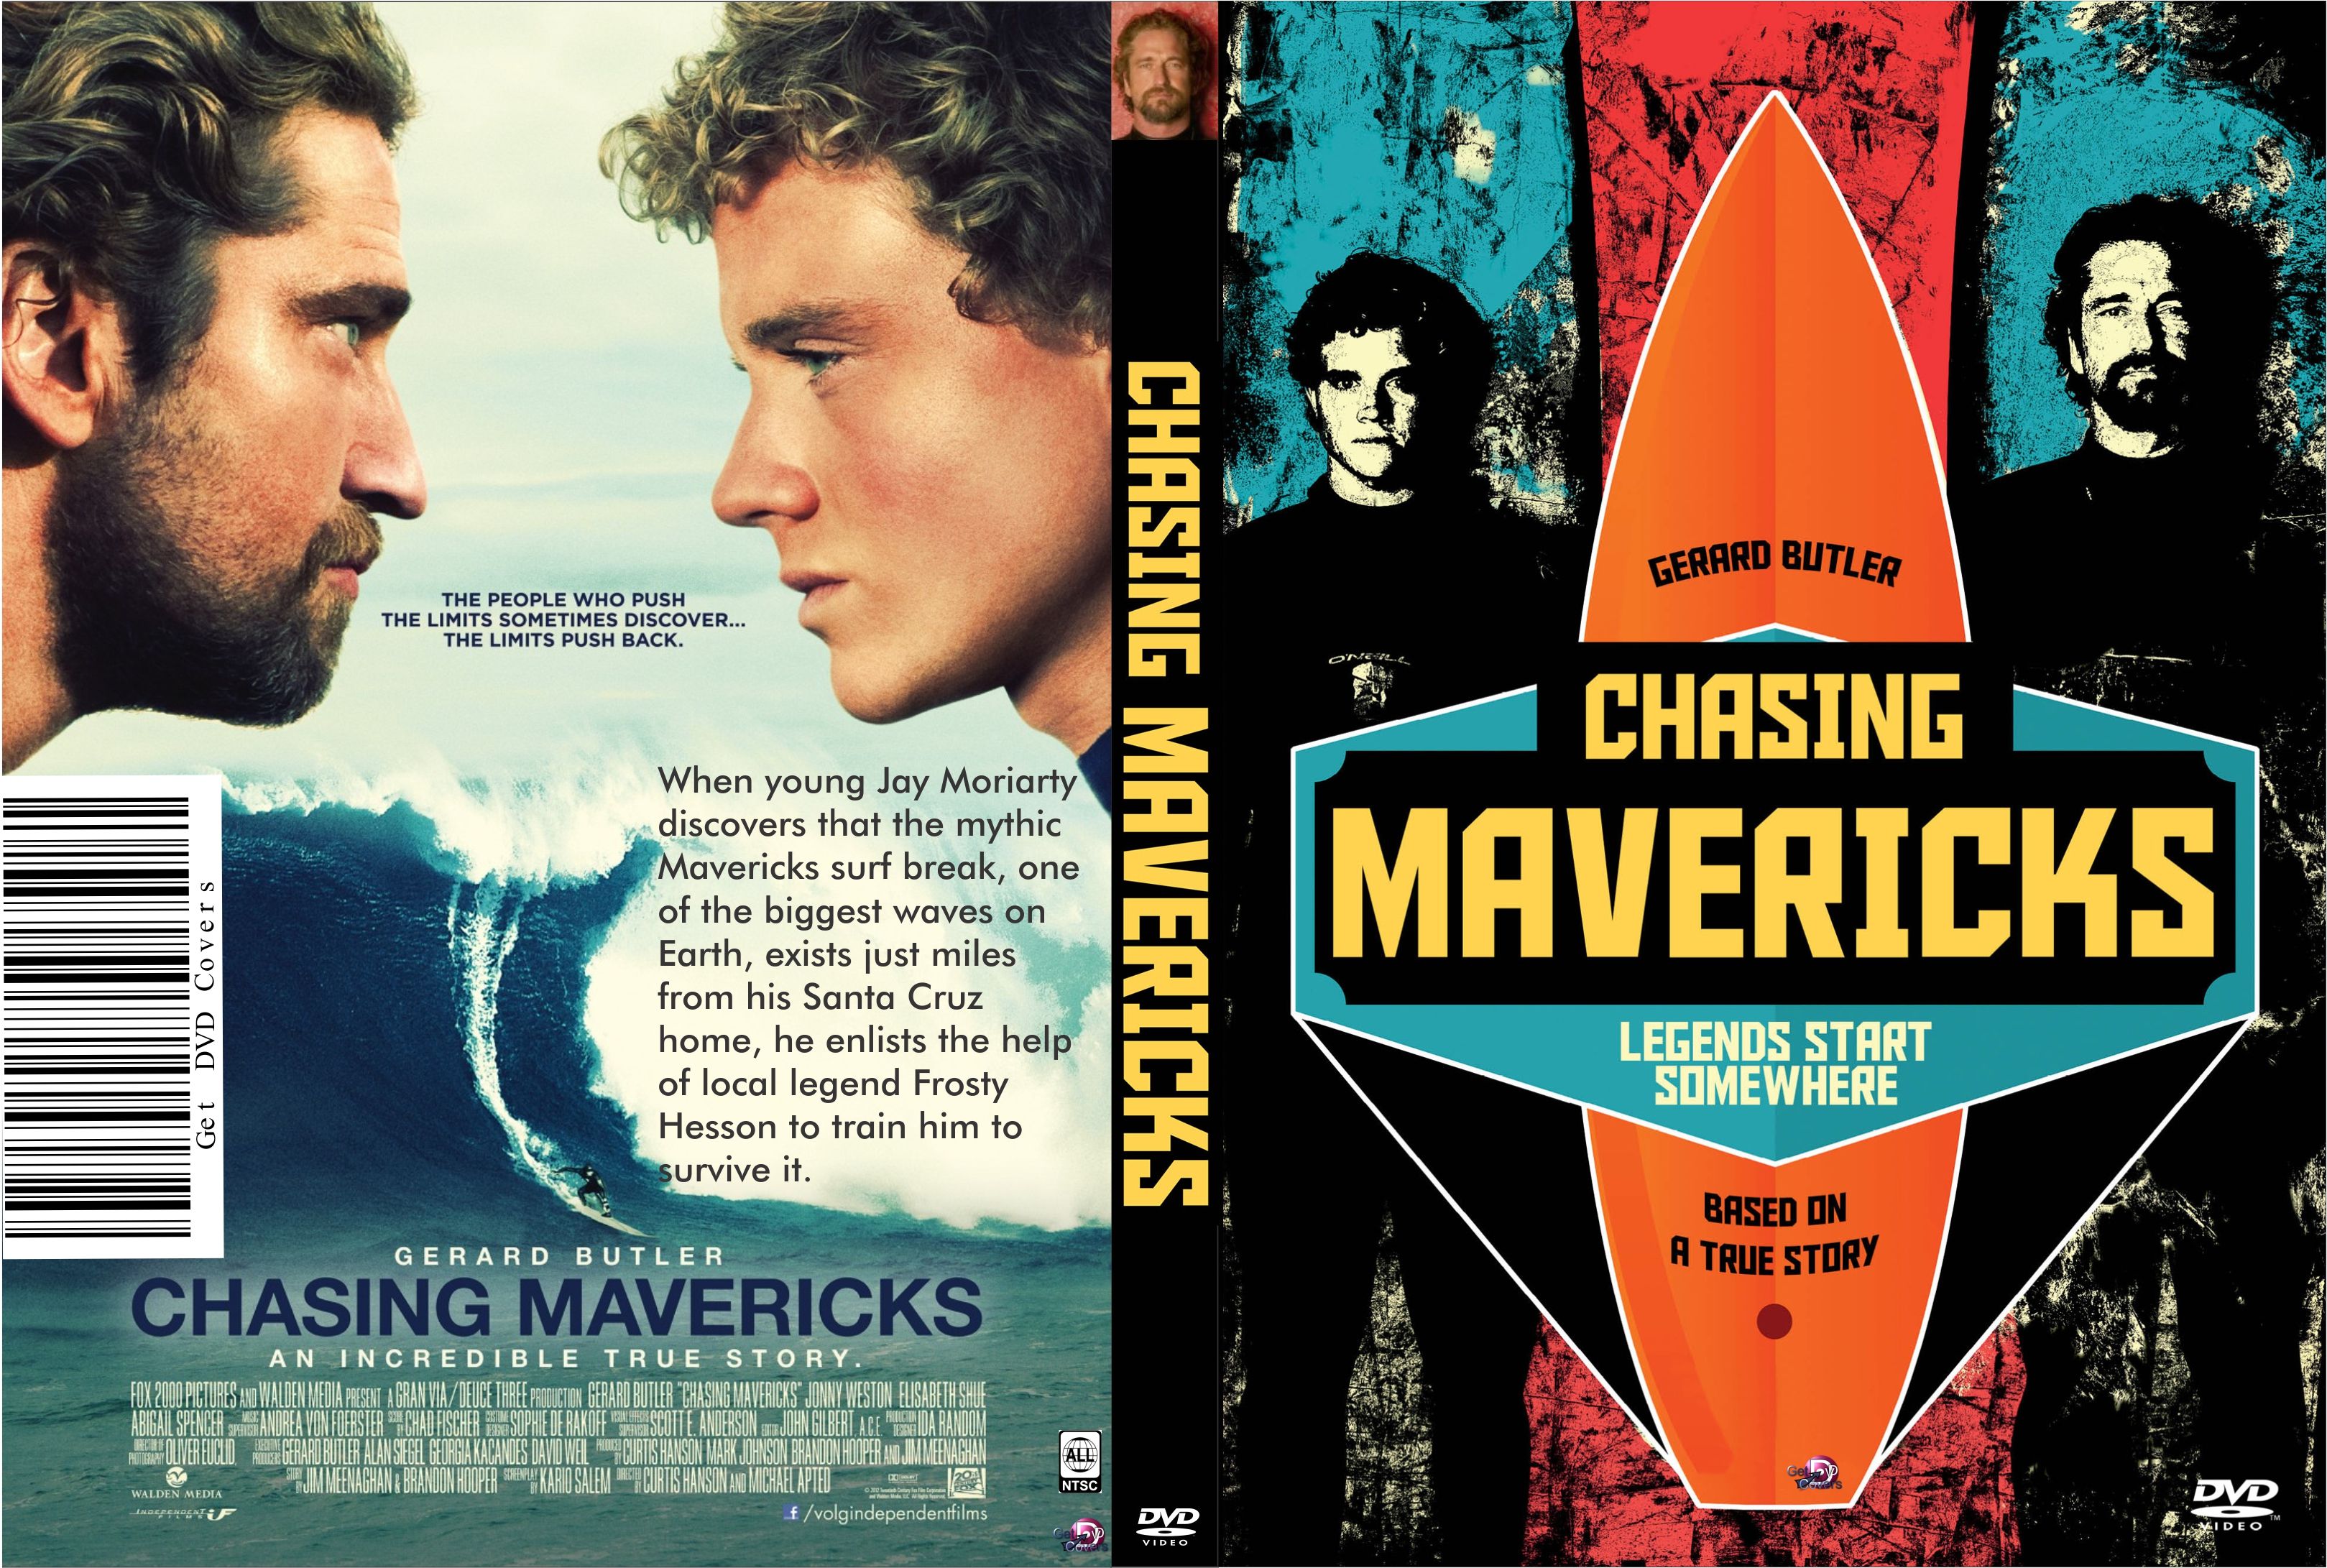 Chasing Mavericks wallpaper, Movie, HQ Chasing Mavericks pictureK Wallpaper 2019